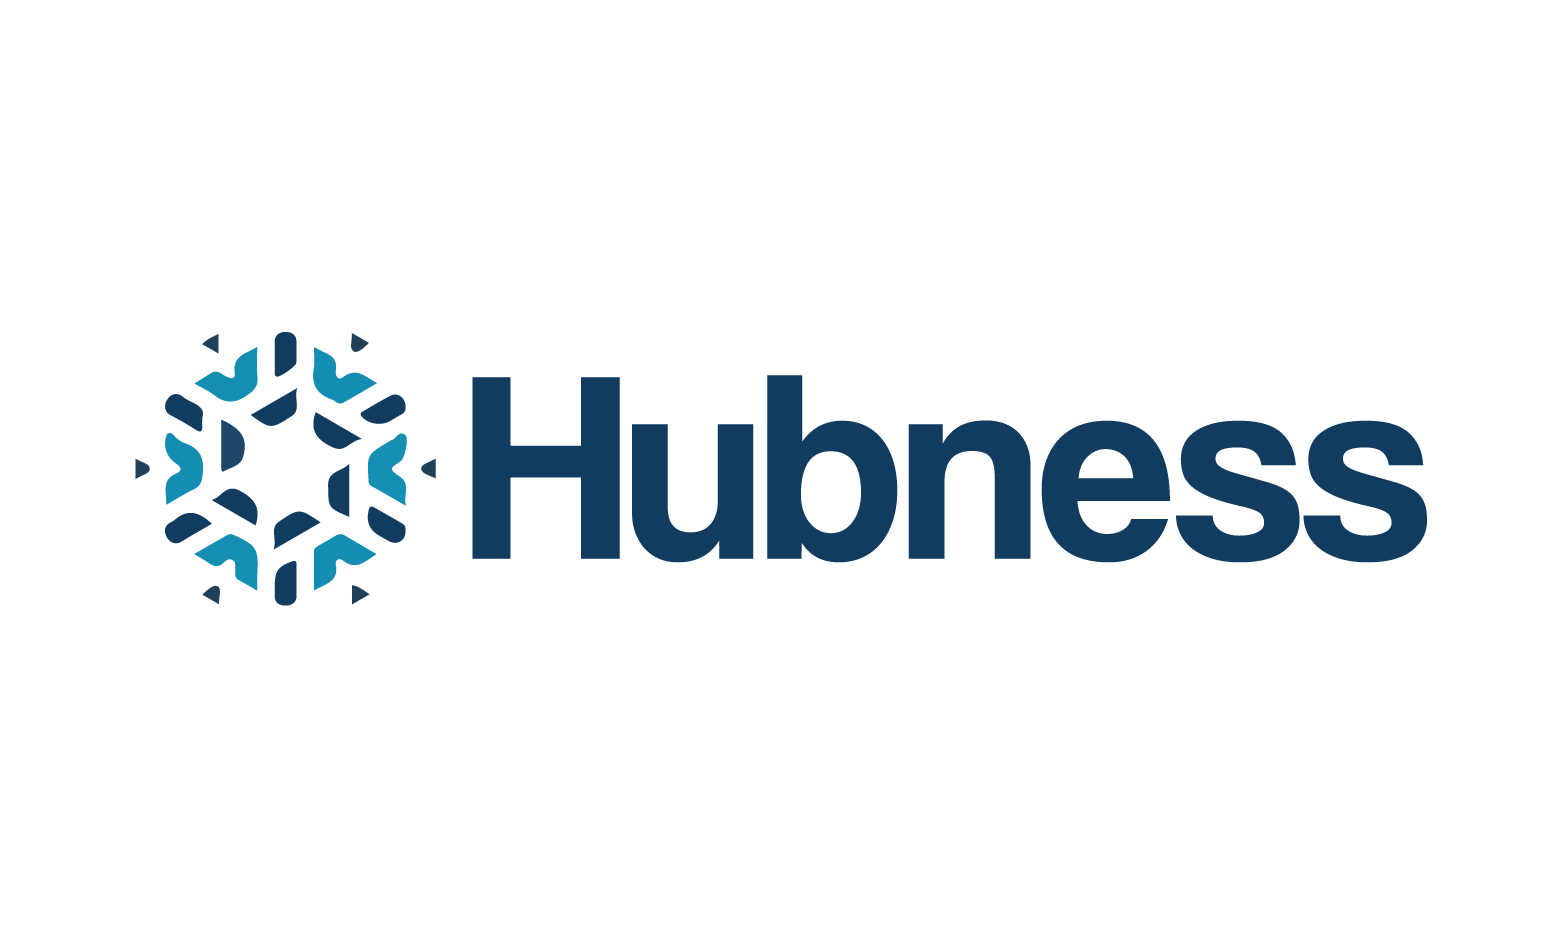 Hubness.com - Creative brandable domain for sale